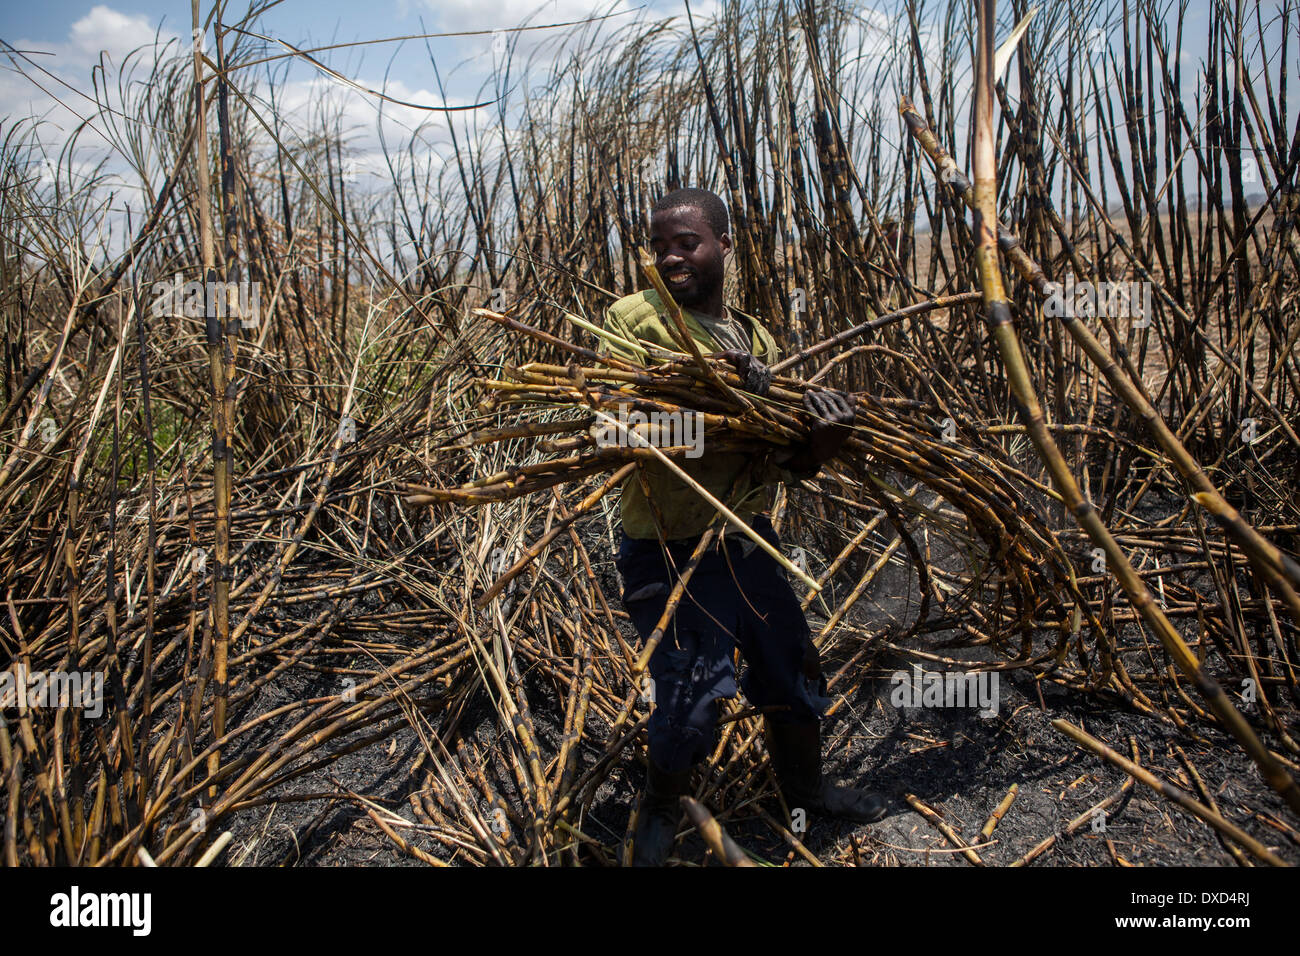 Sugar cane farm labourers harvesting sugar cane on a plantation in Malawi, Africa Stock Photo